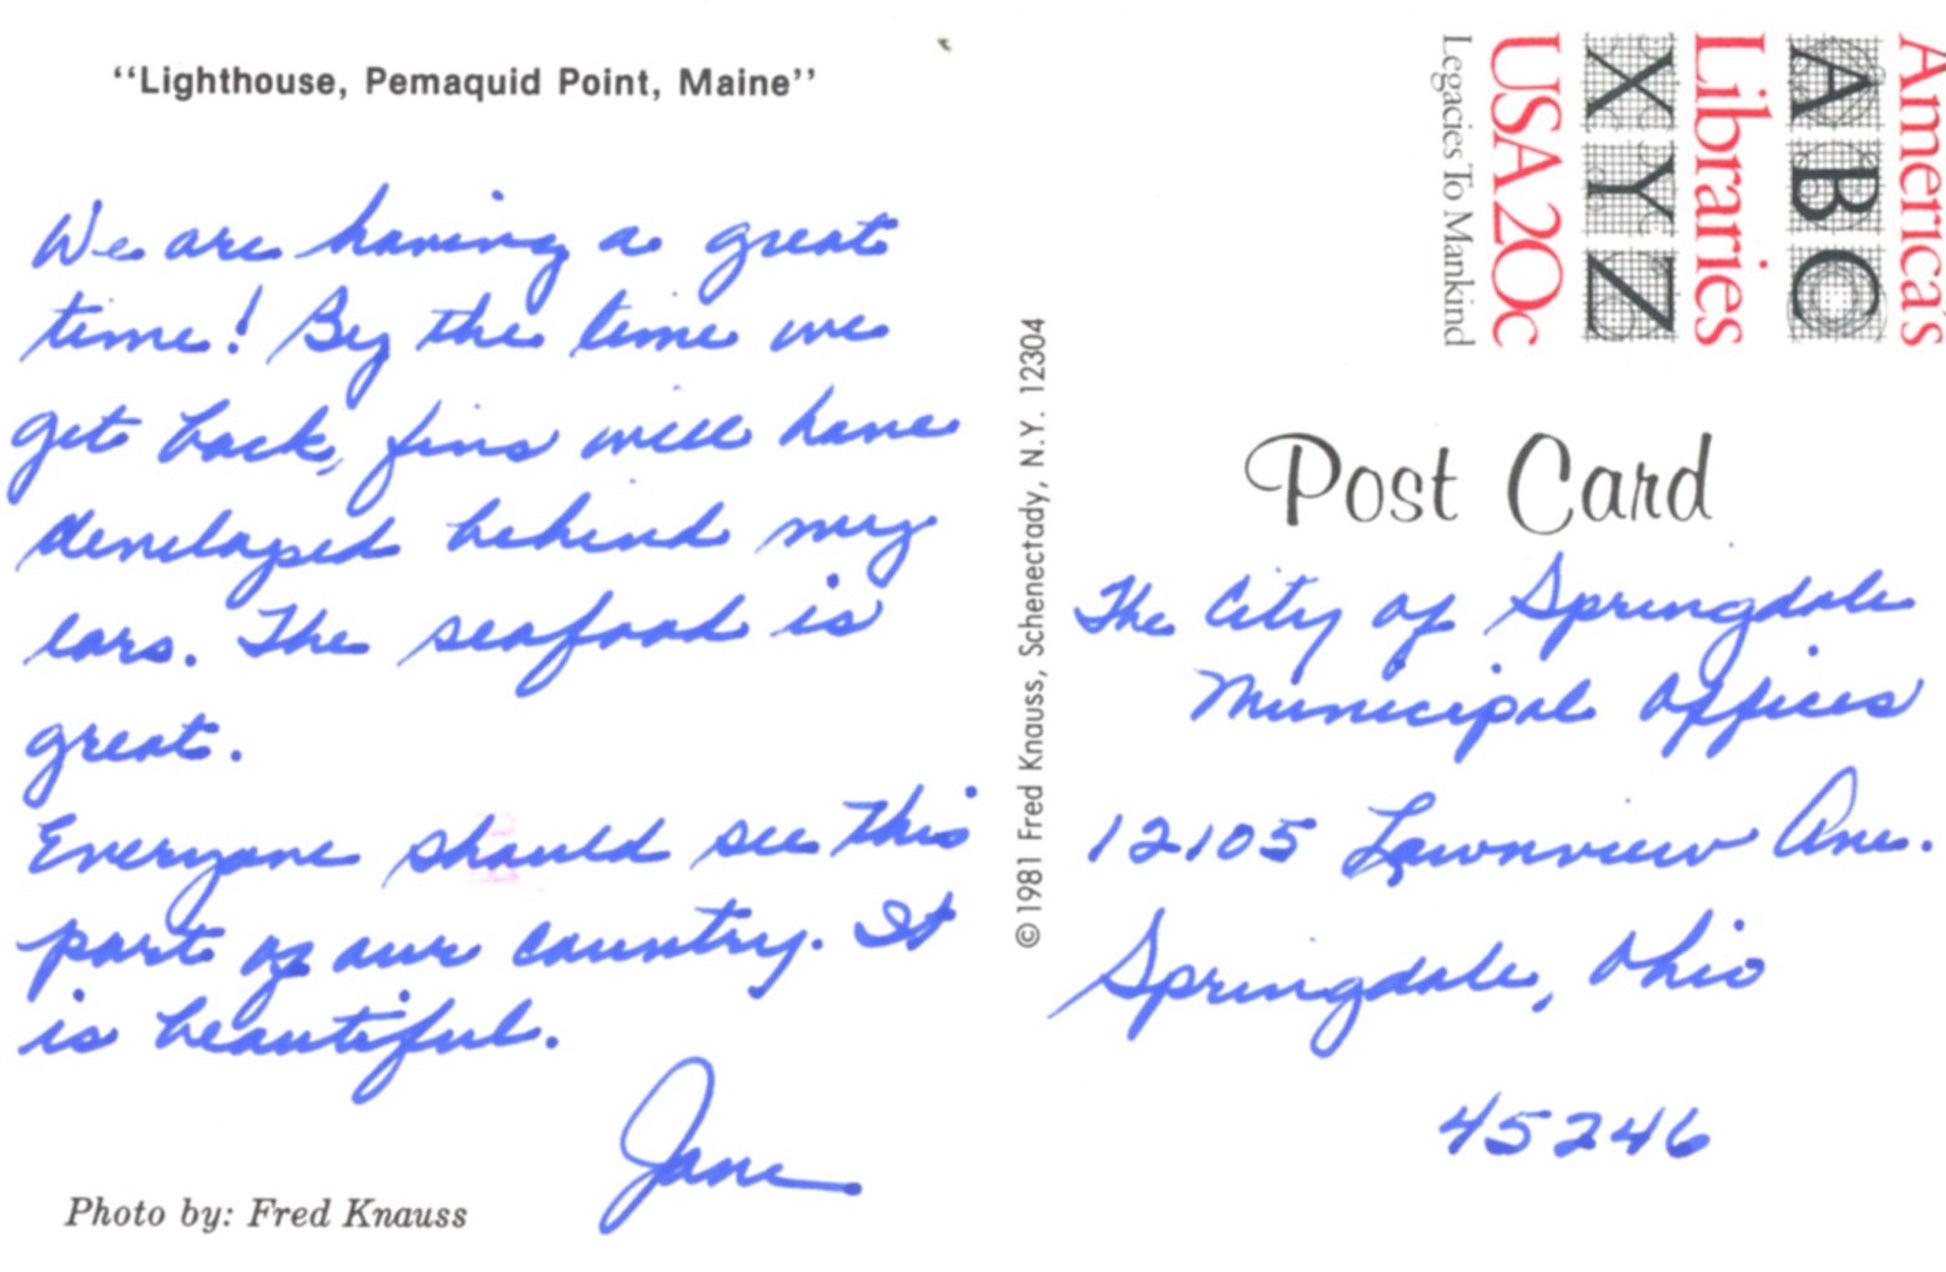 Lighthouse at PEMAQUID POINT MAINE Vintage Postcard ©1970's